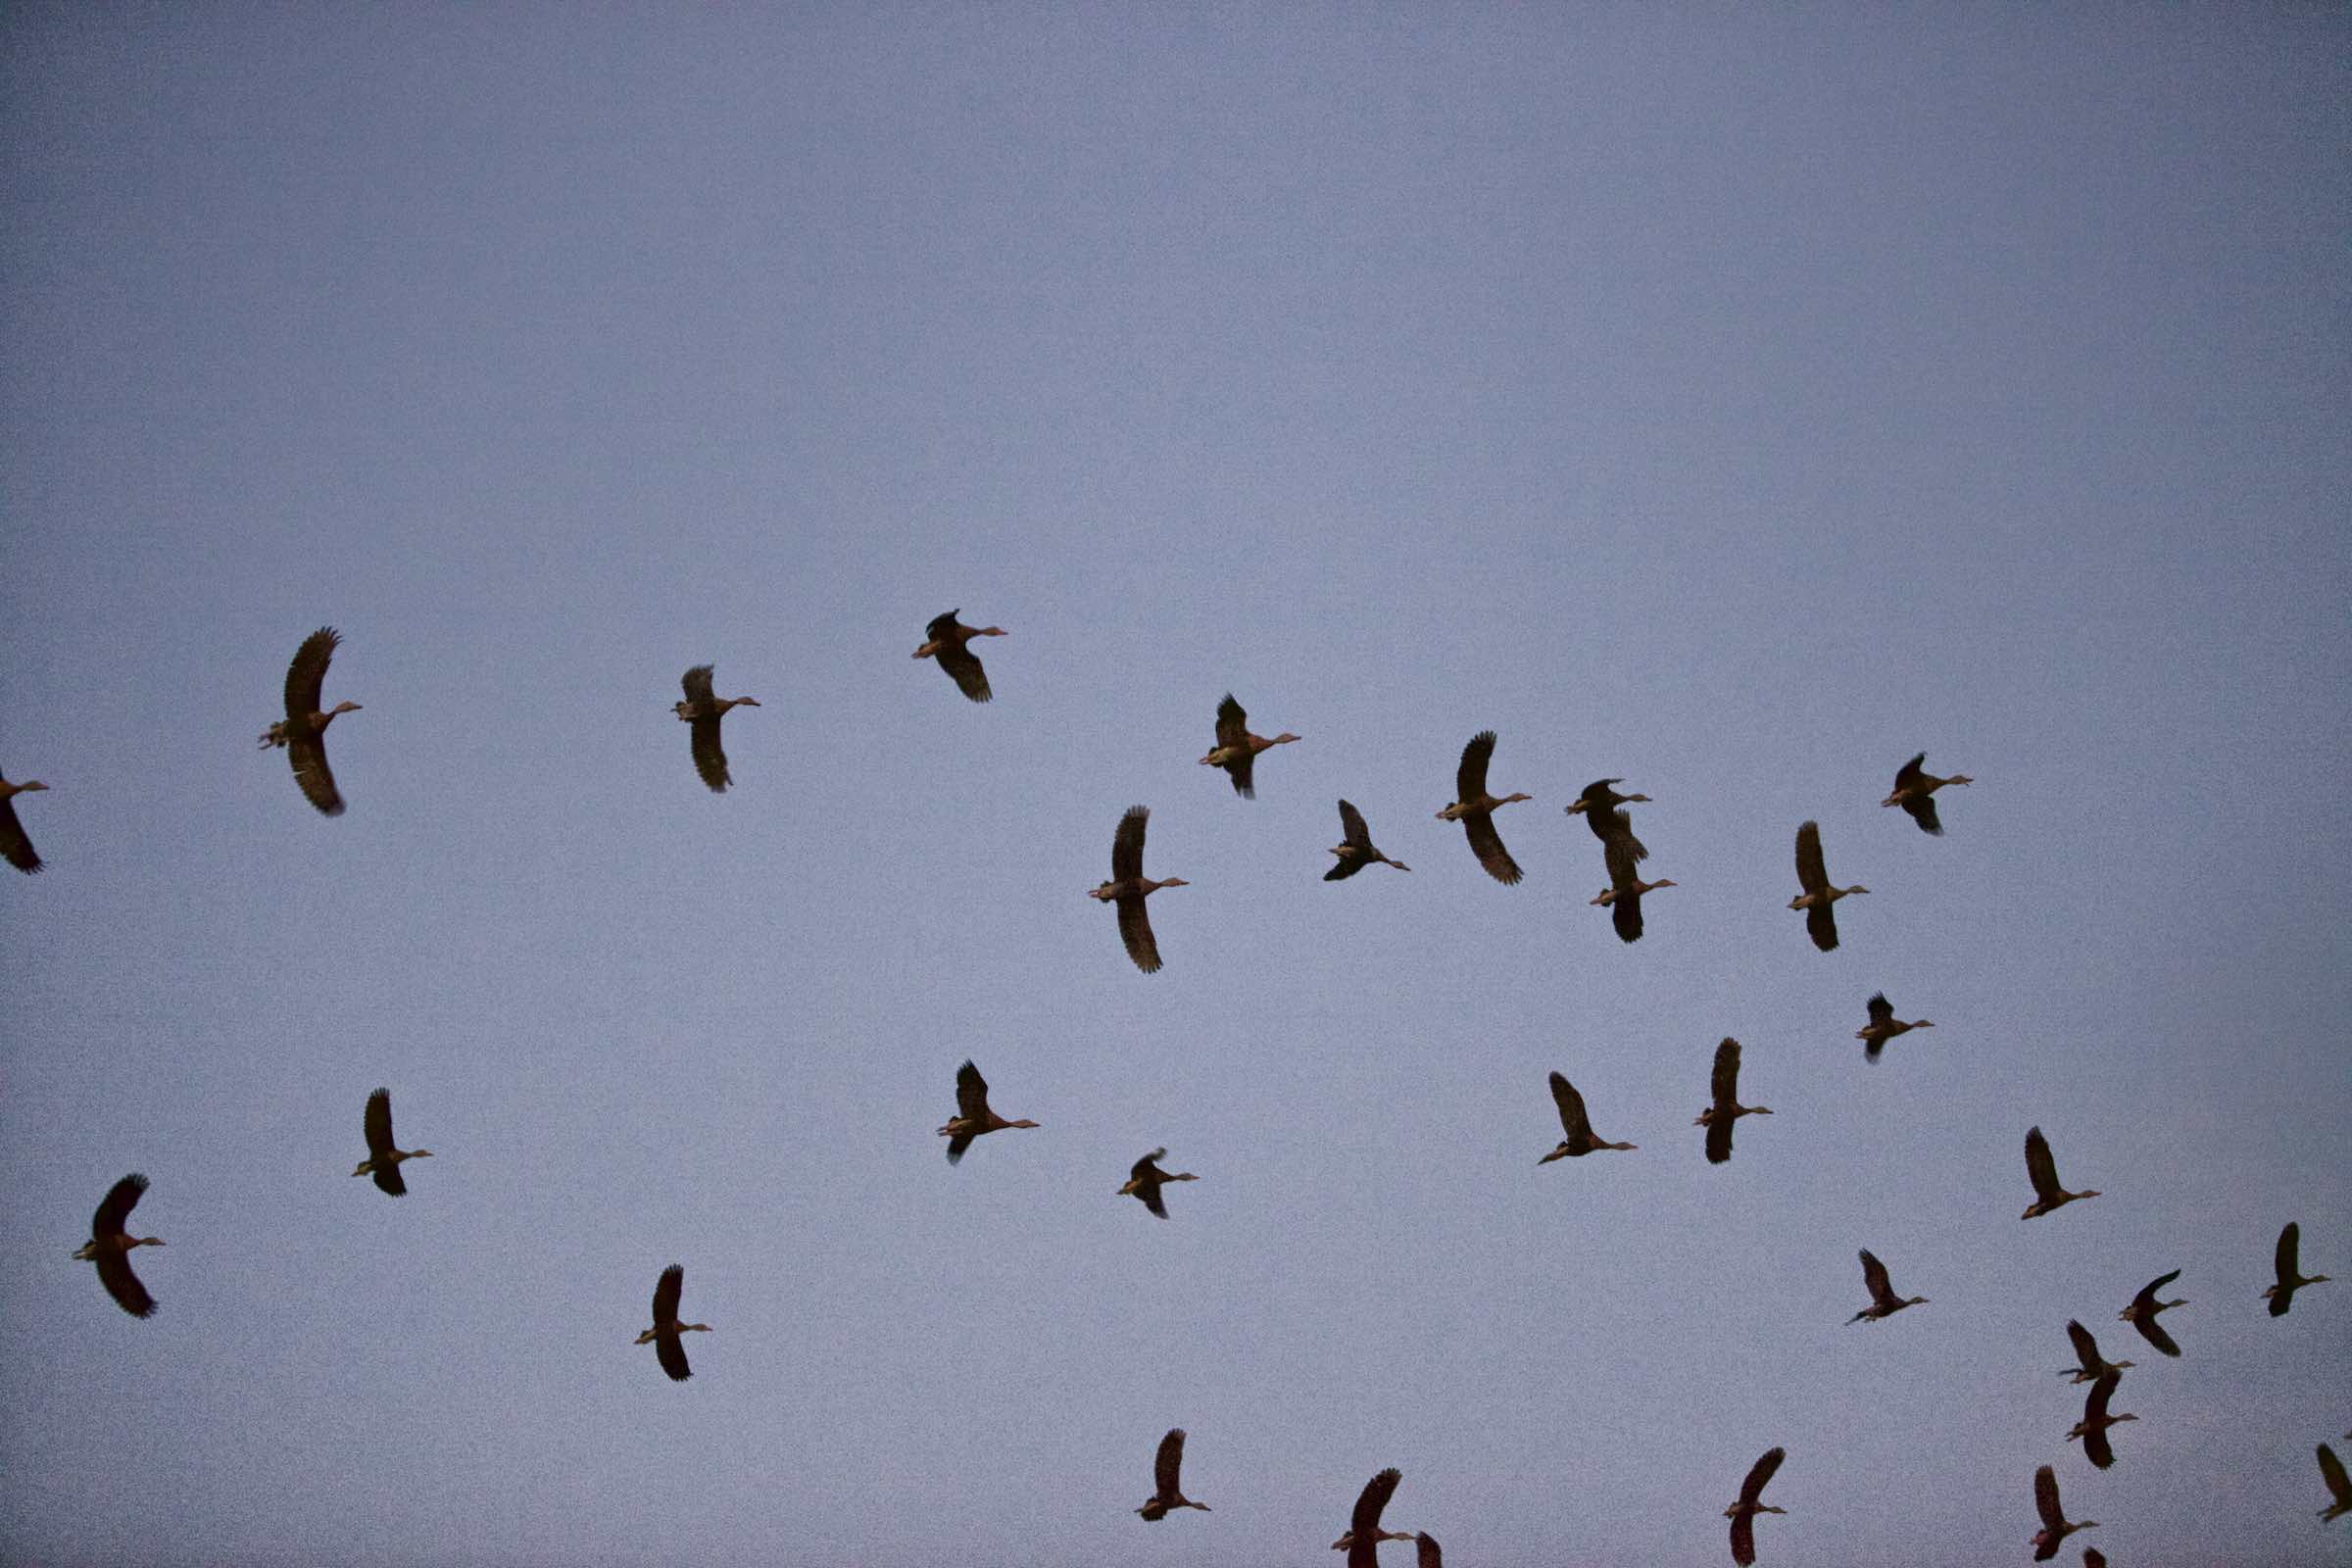 Jody Horton Photography - Ducks flying across a grey sky.